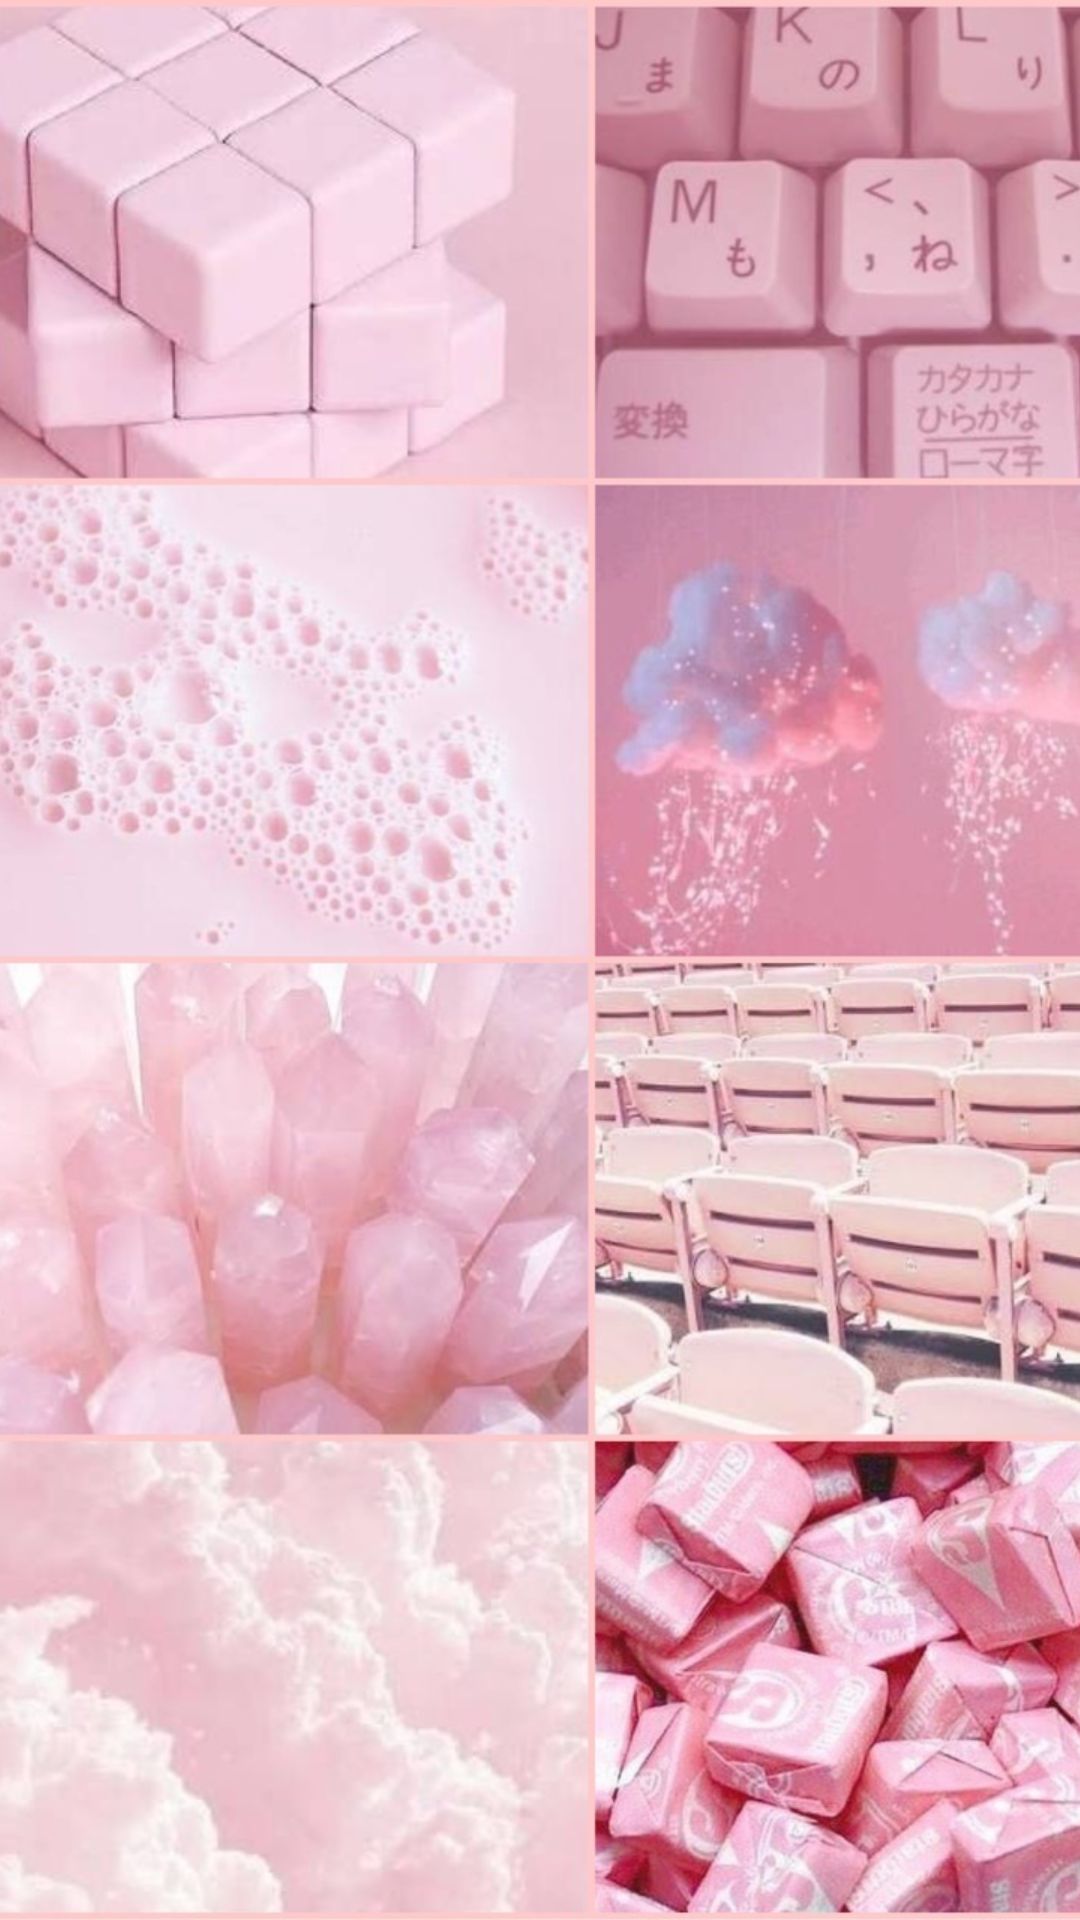 Aesthetic Pink Wallpaper iPhone X